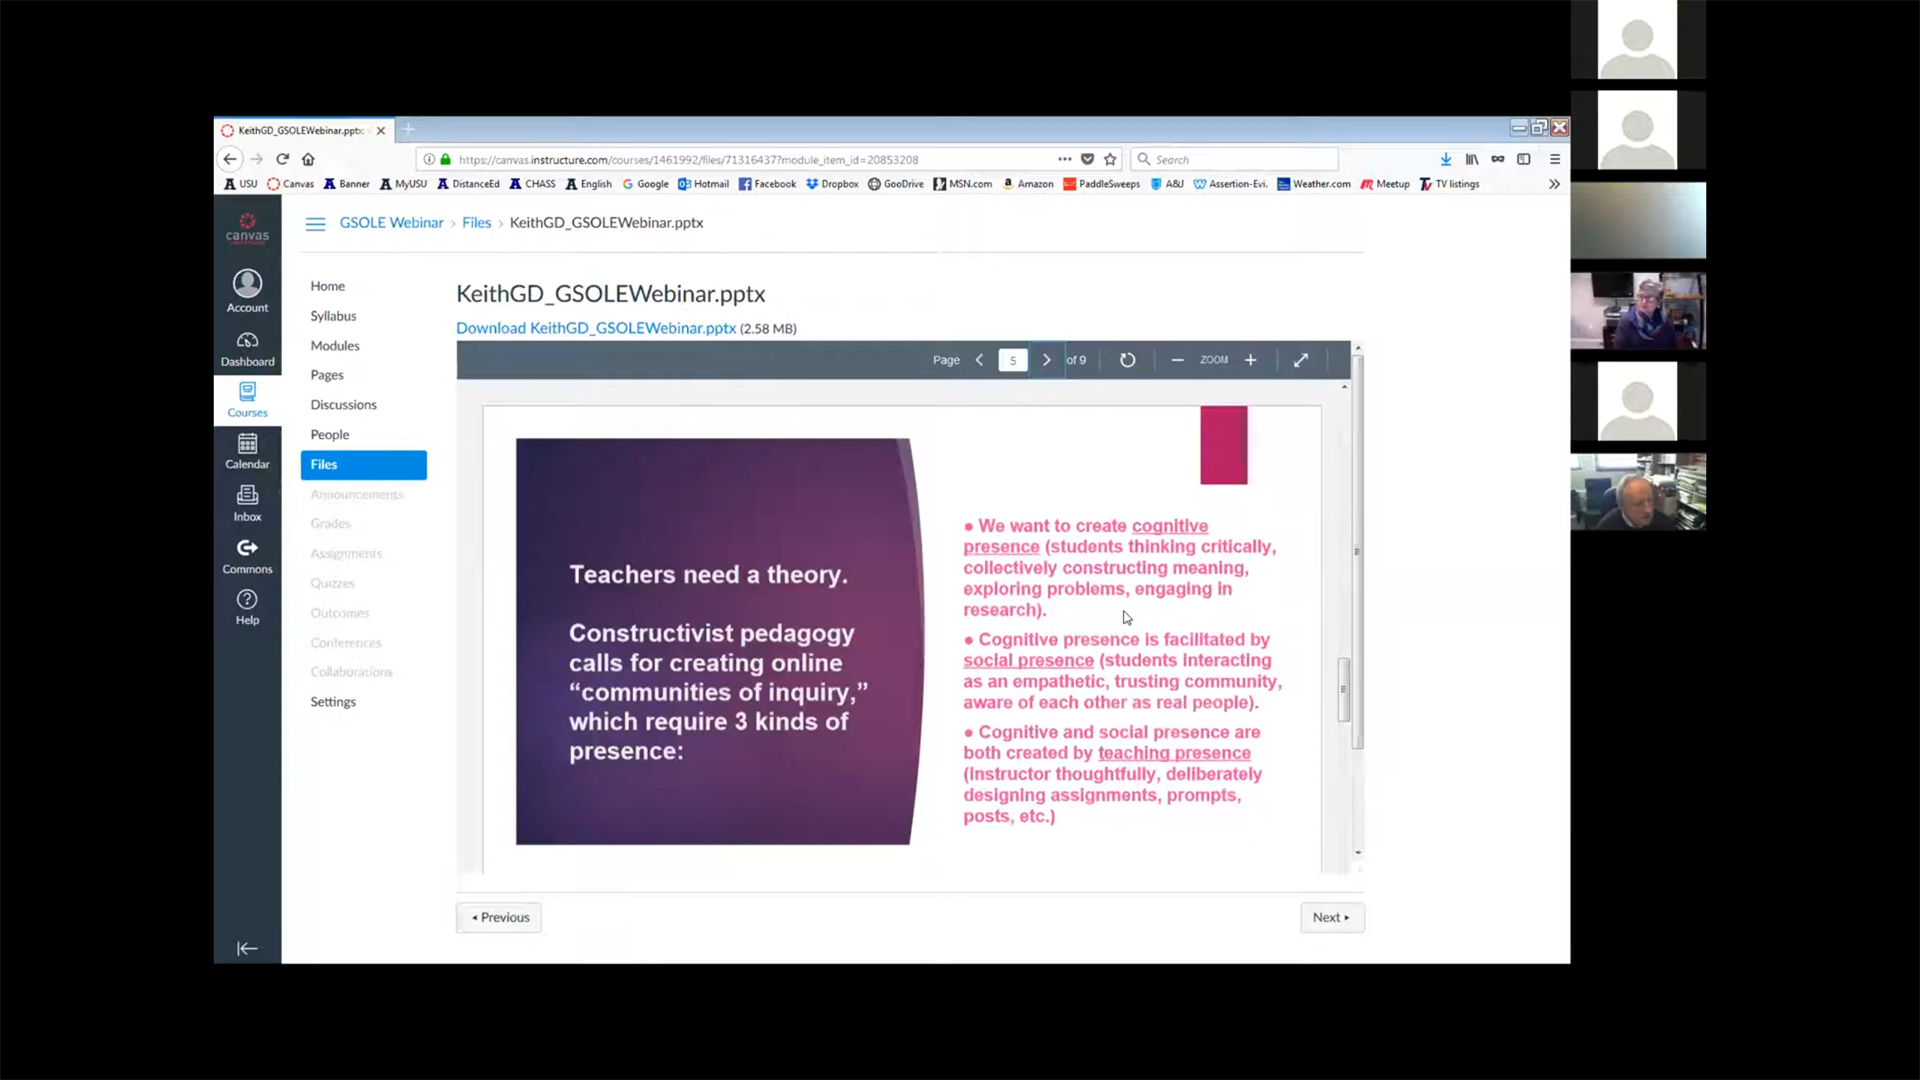 Webinar Screen Capture: Slide title "Teachers need a Theory..."